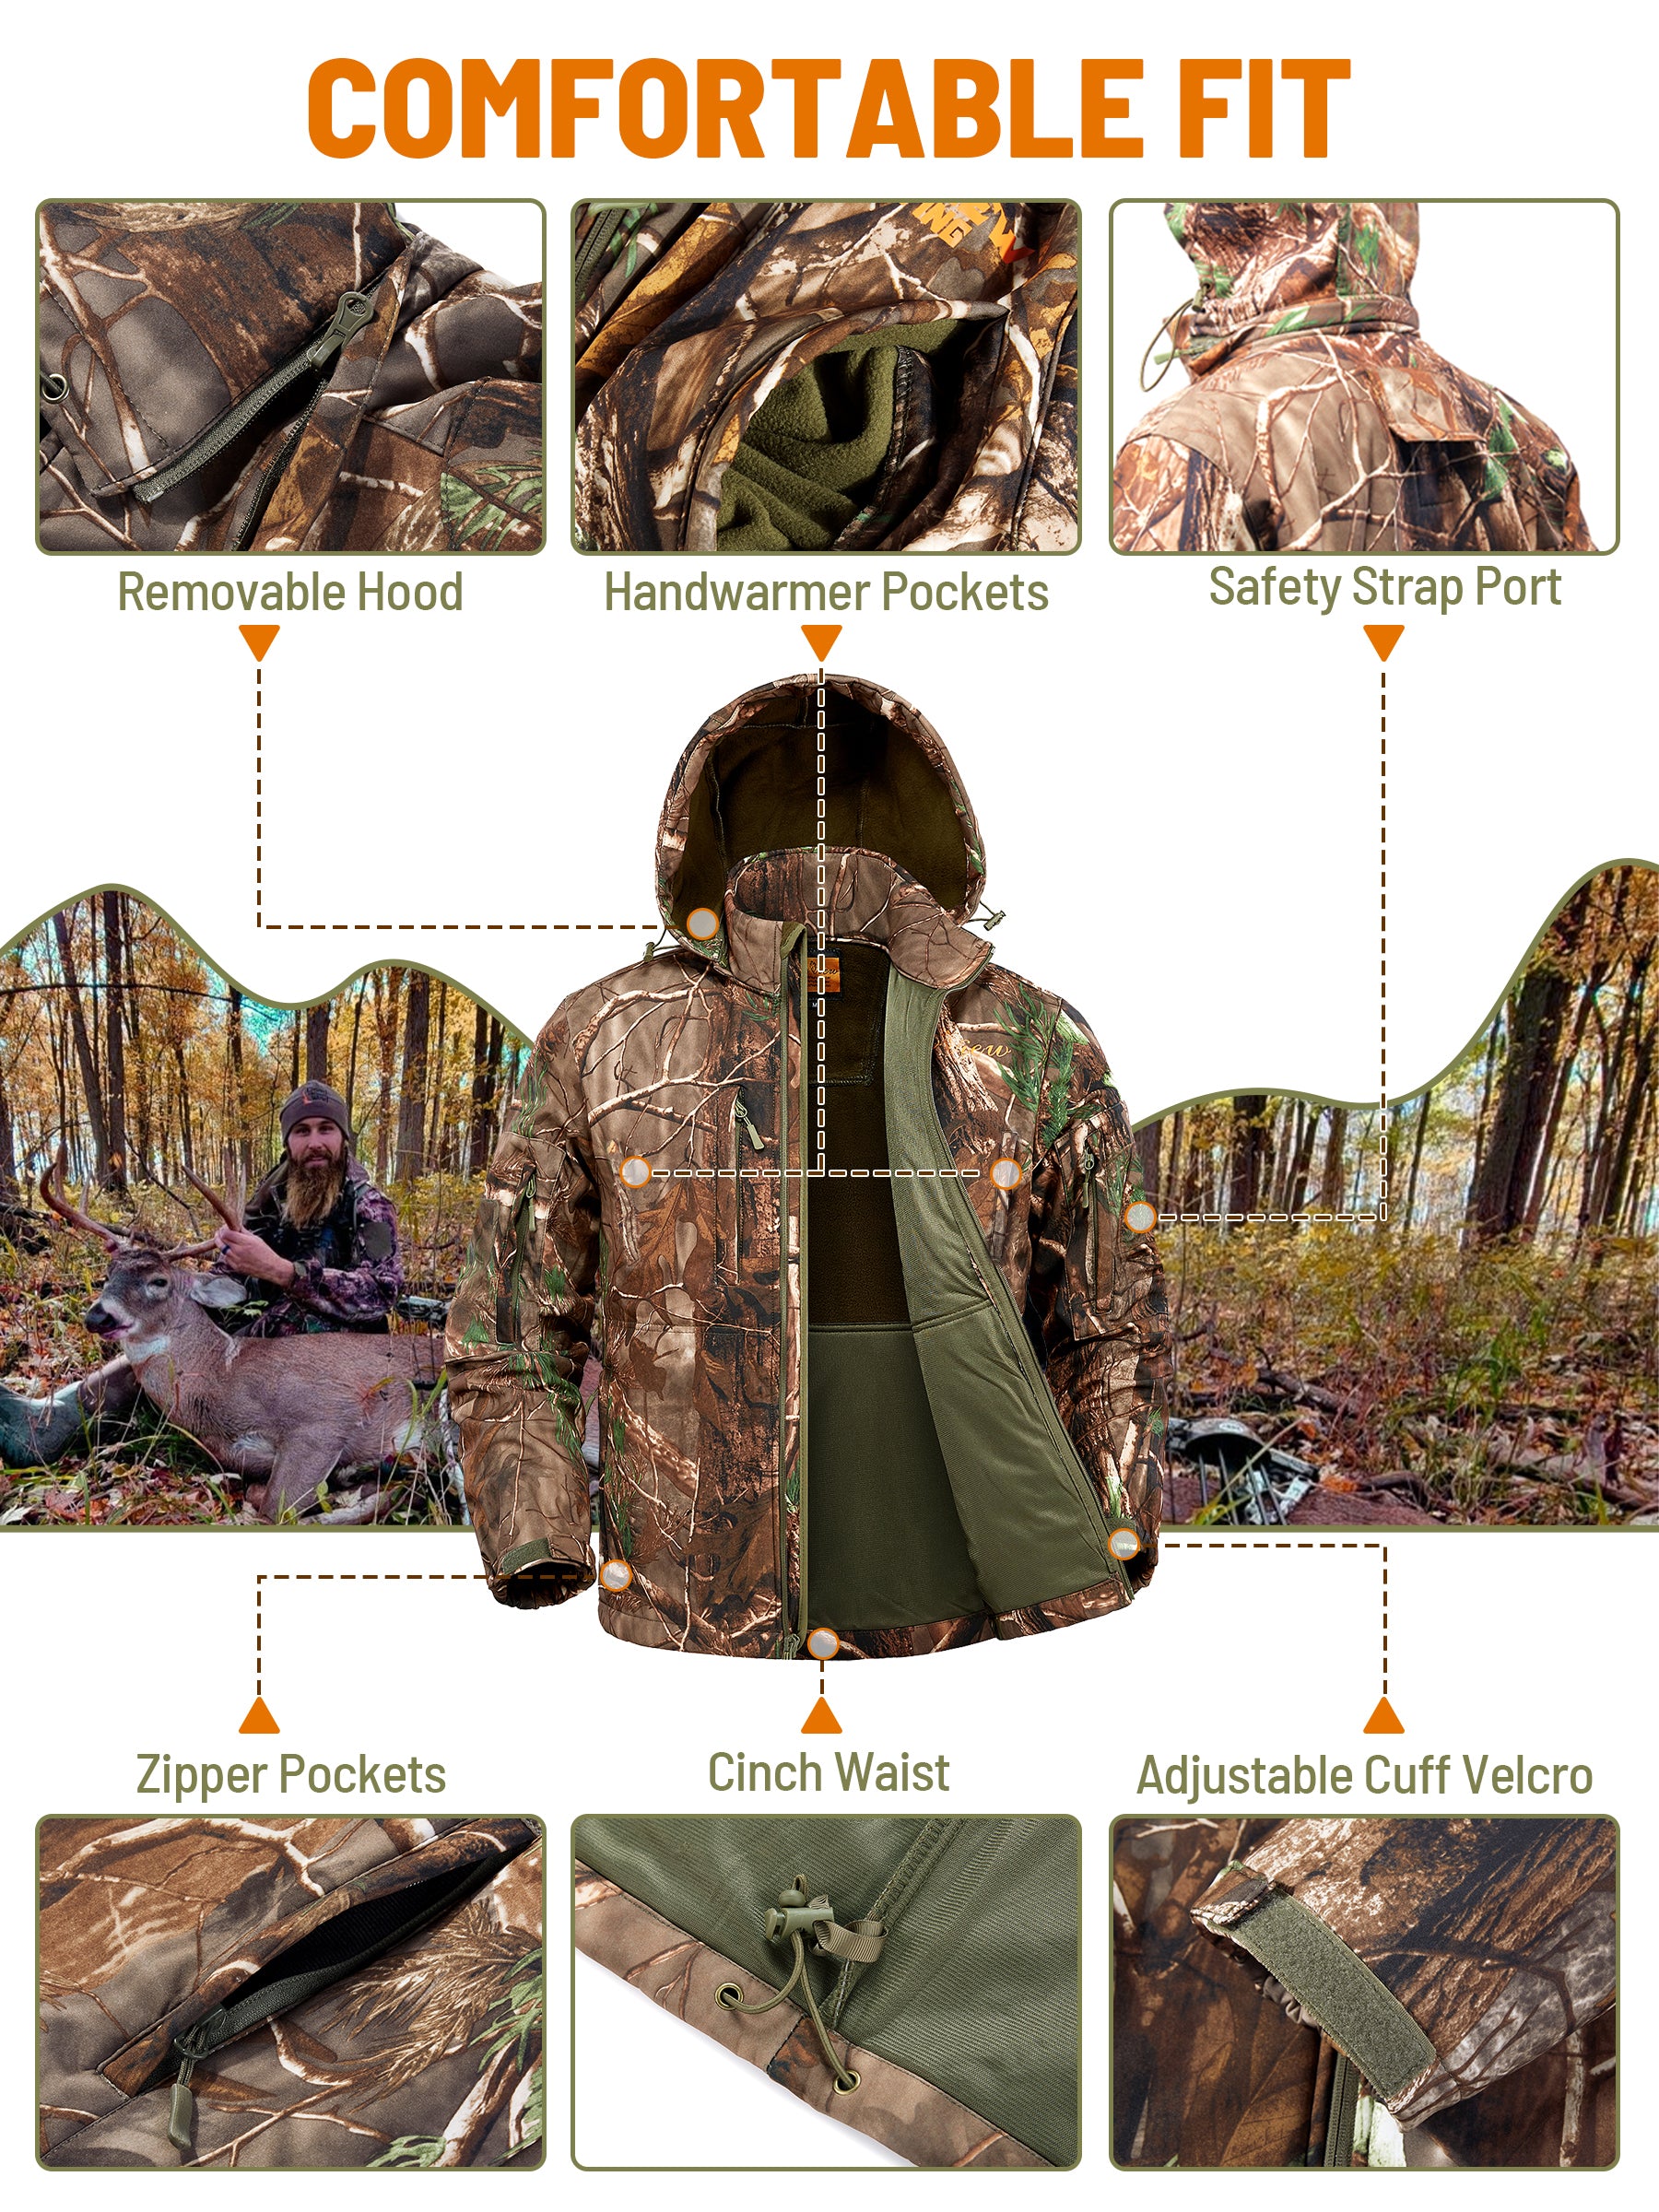 Hunting Jackets  Shop Camo Jackets & Camo Hunting Coats Online - Natural  Gear